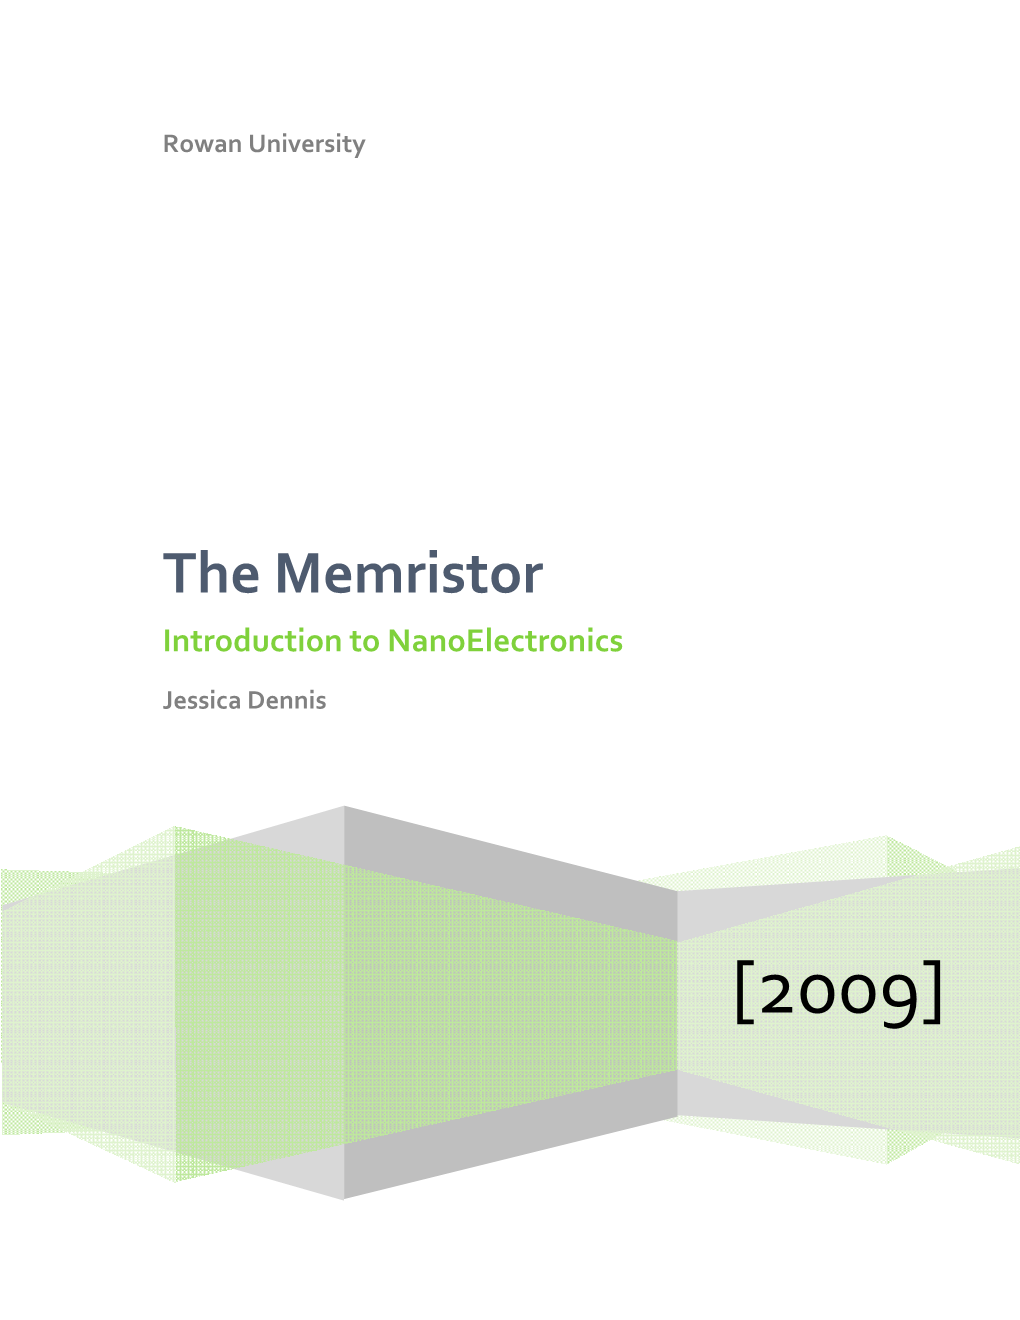 The Memristor Introduction to Nanoelectronics